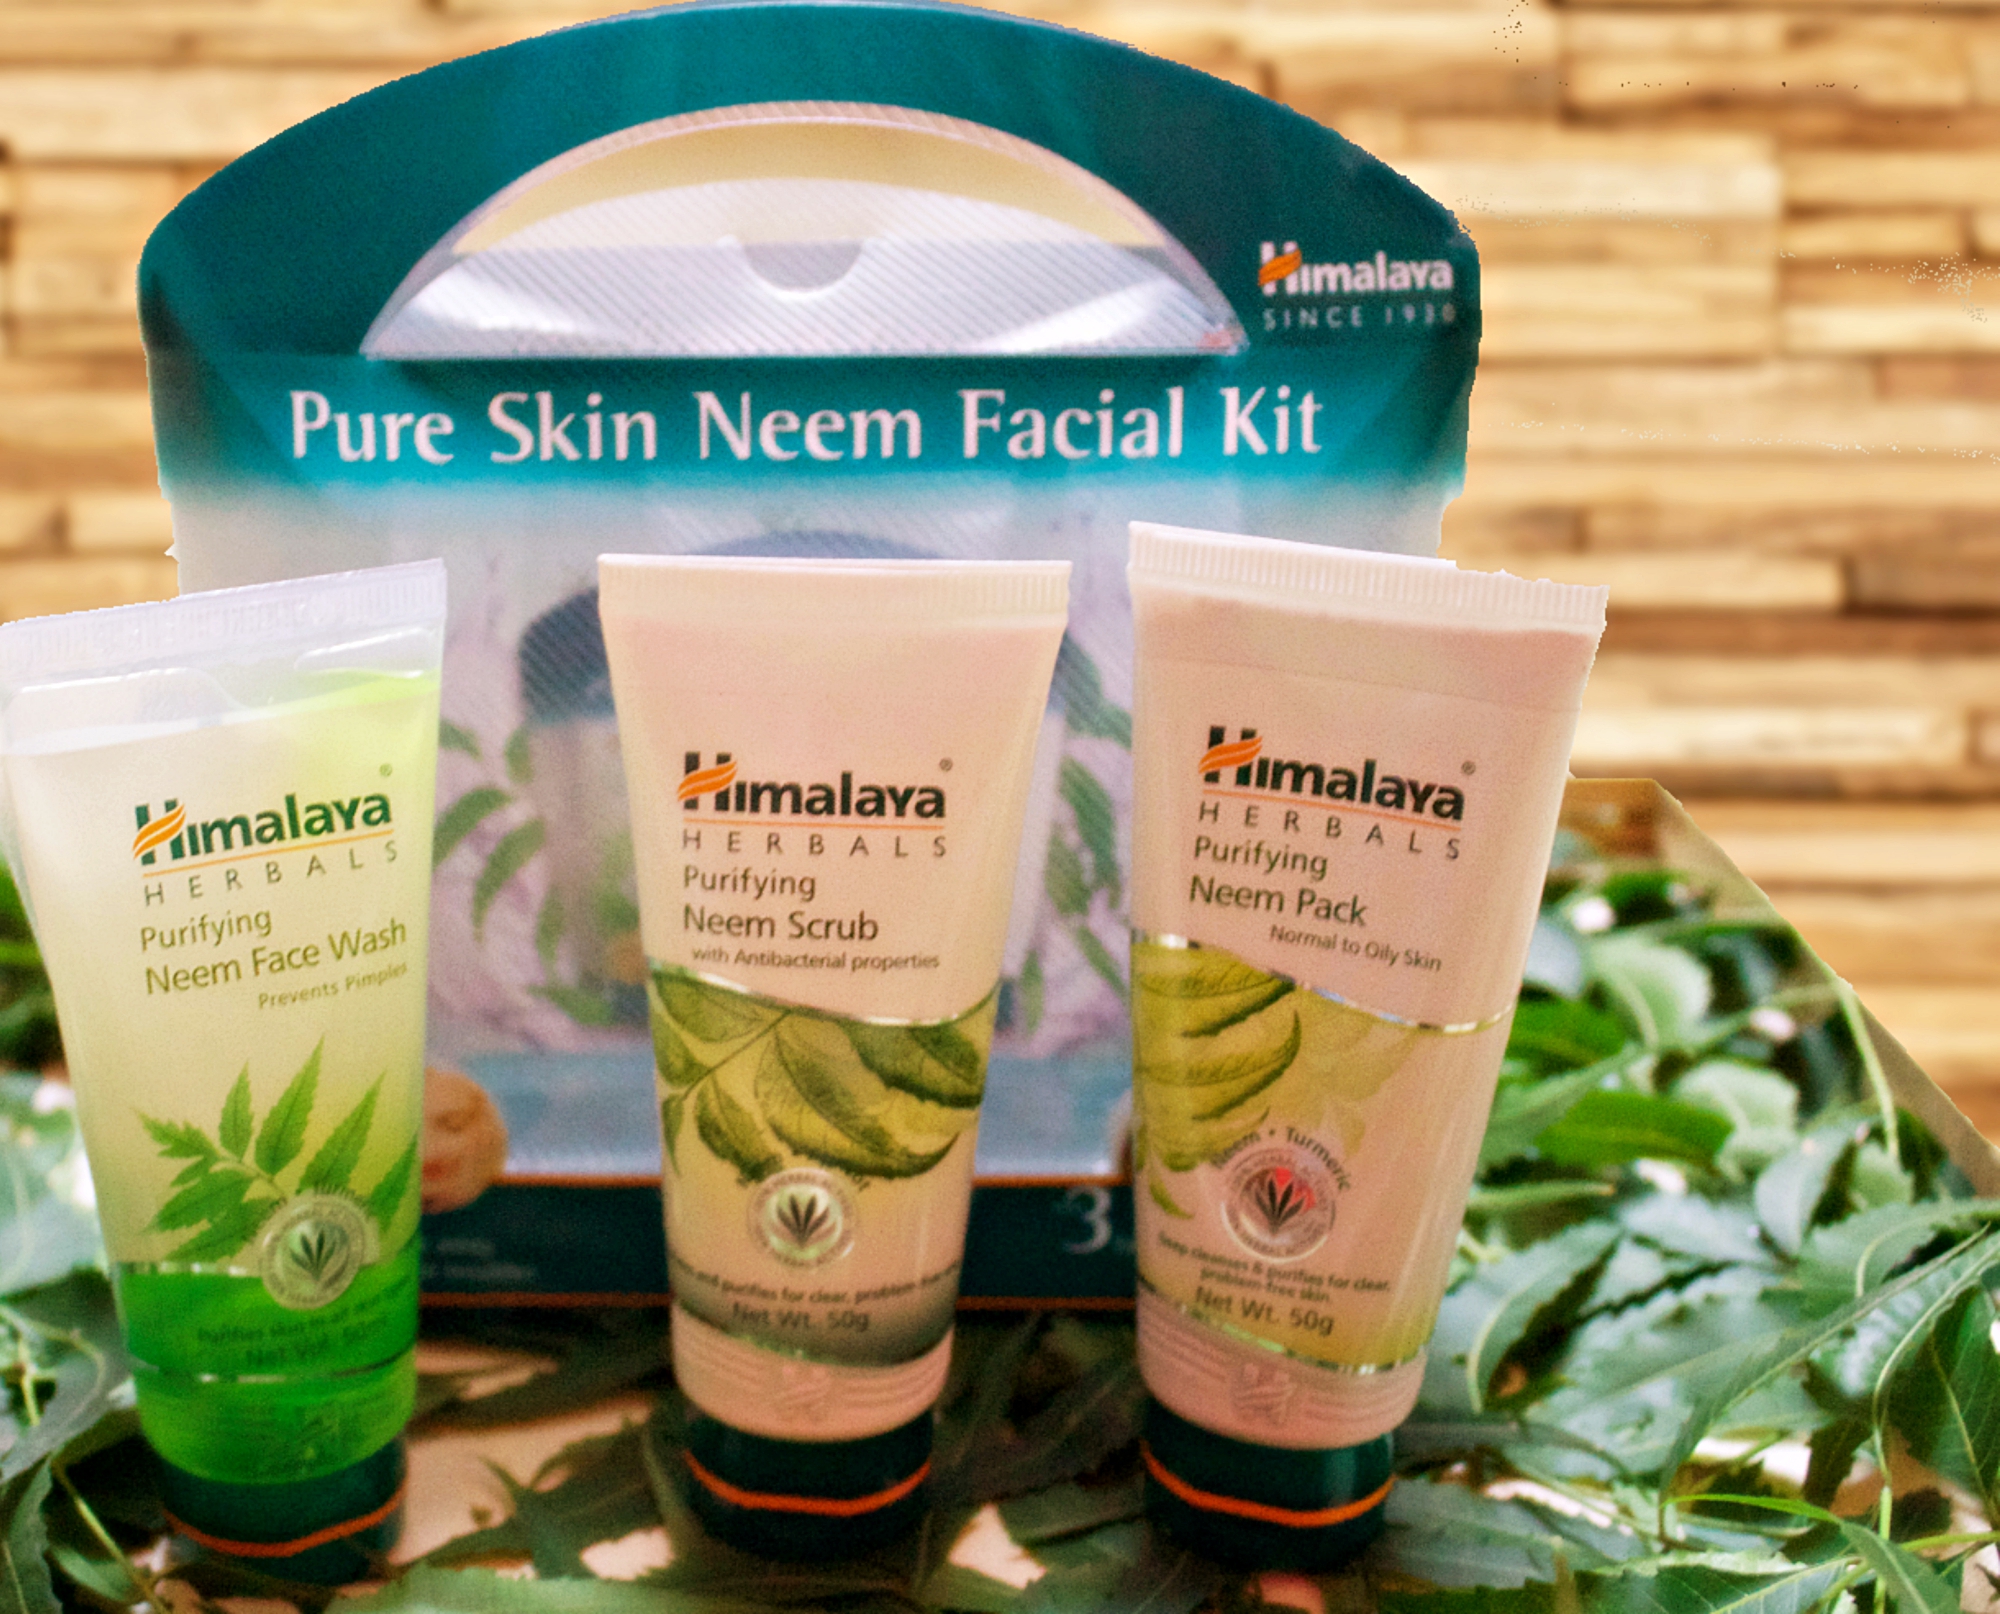 Why Use Himalaya Pure Skin Neem Facial Kit